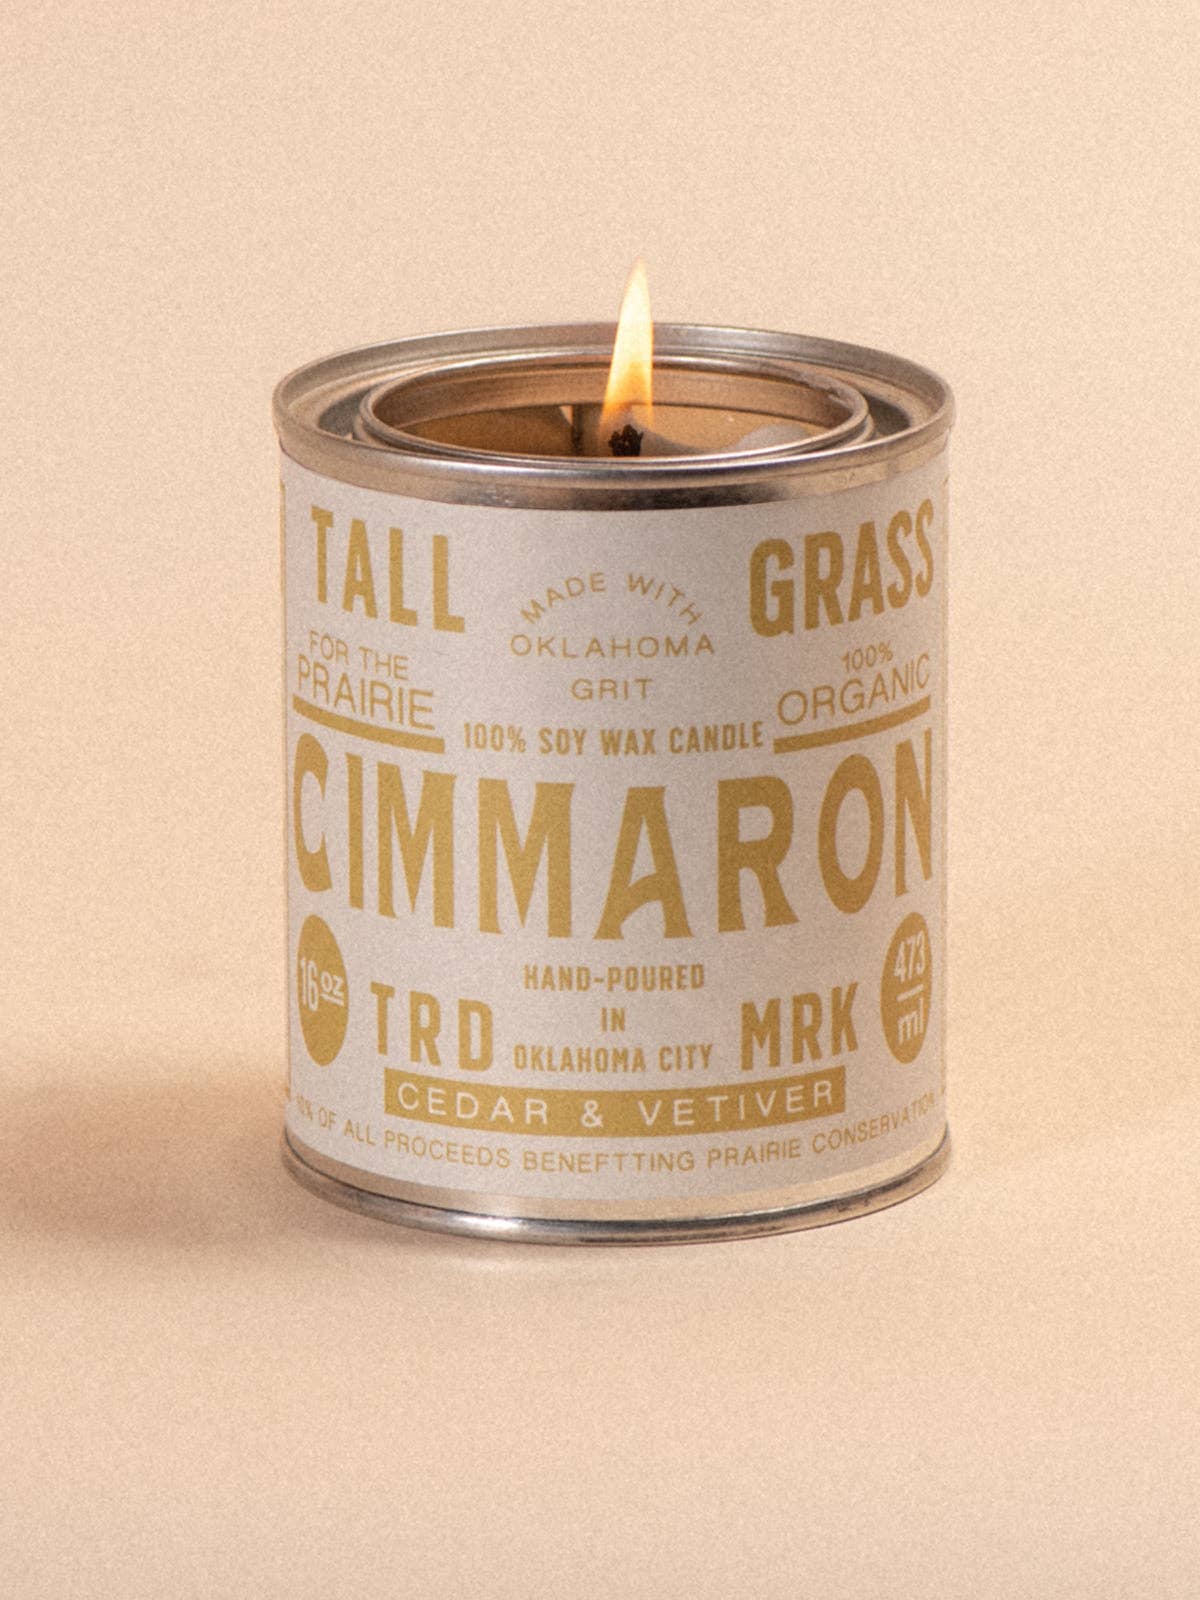 Cimmaron: Cedar + Vetiver Soy Wax Candle